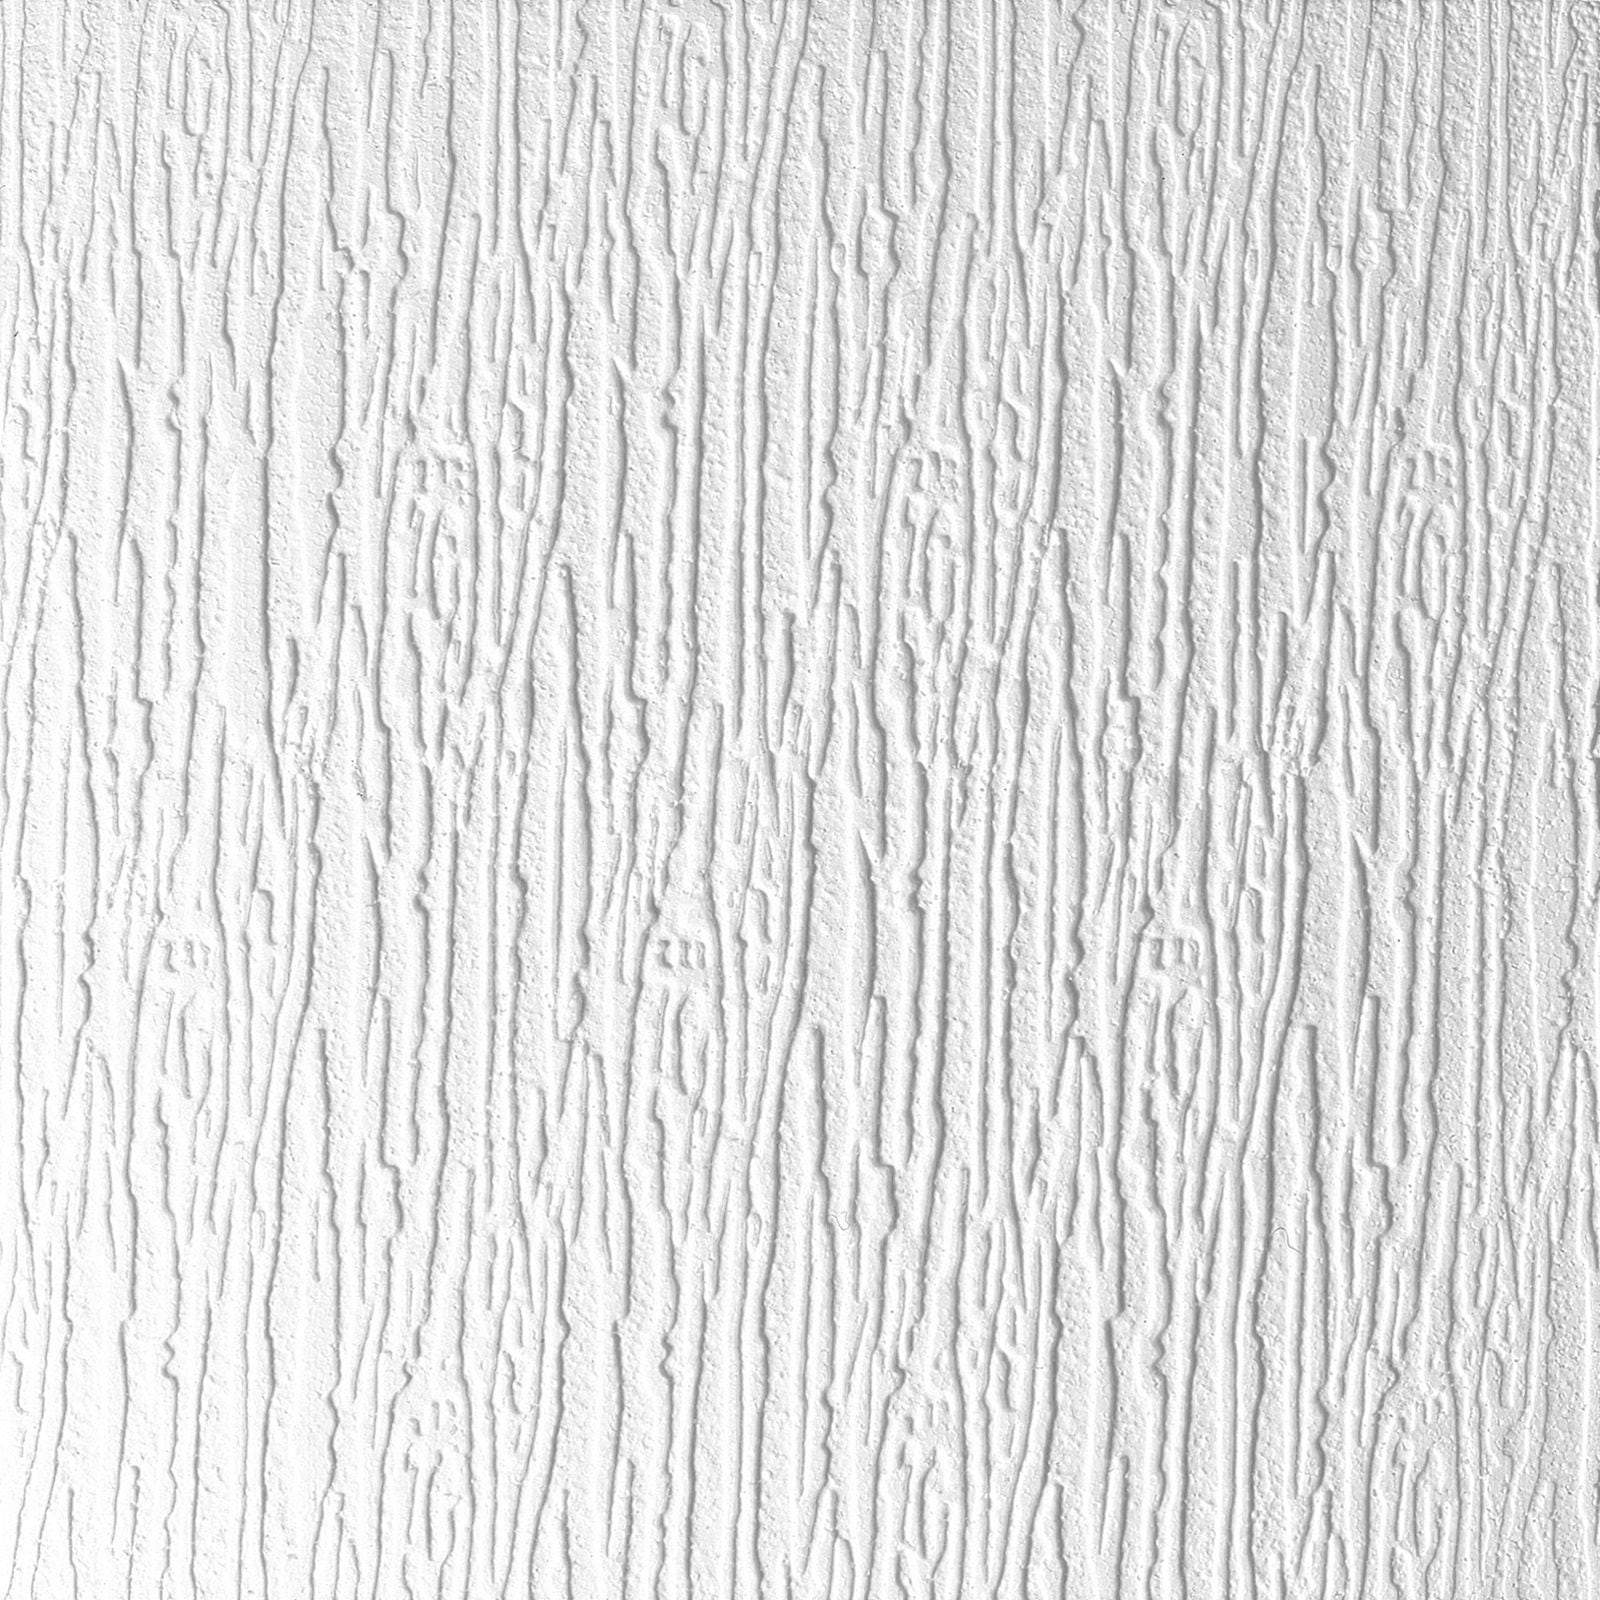 shy content core Dedeman - Tavan fals decorativ, polistiren expandat, F Iasi, clasic, alb,  49.5 x 49.5 x 0.7 cm - Dedicat planurilor tale